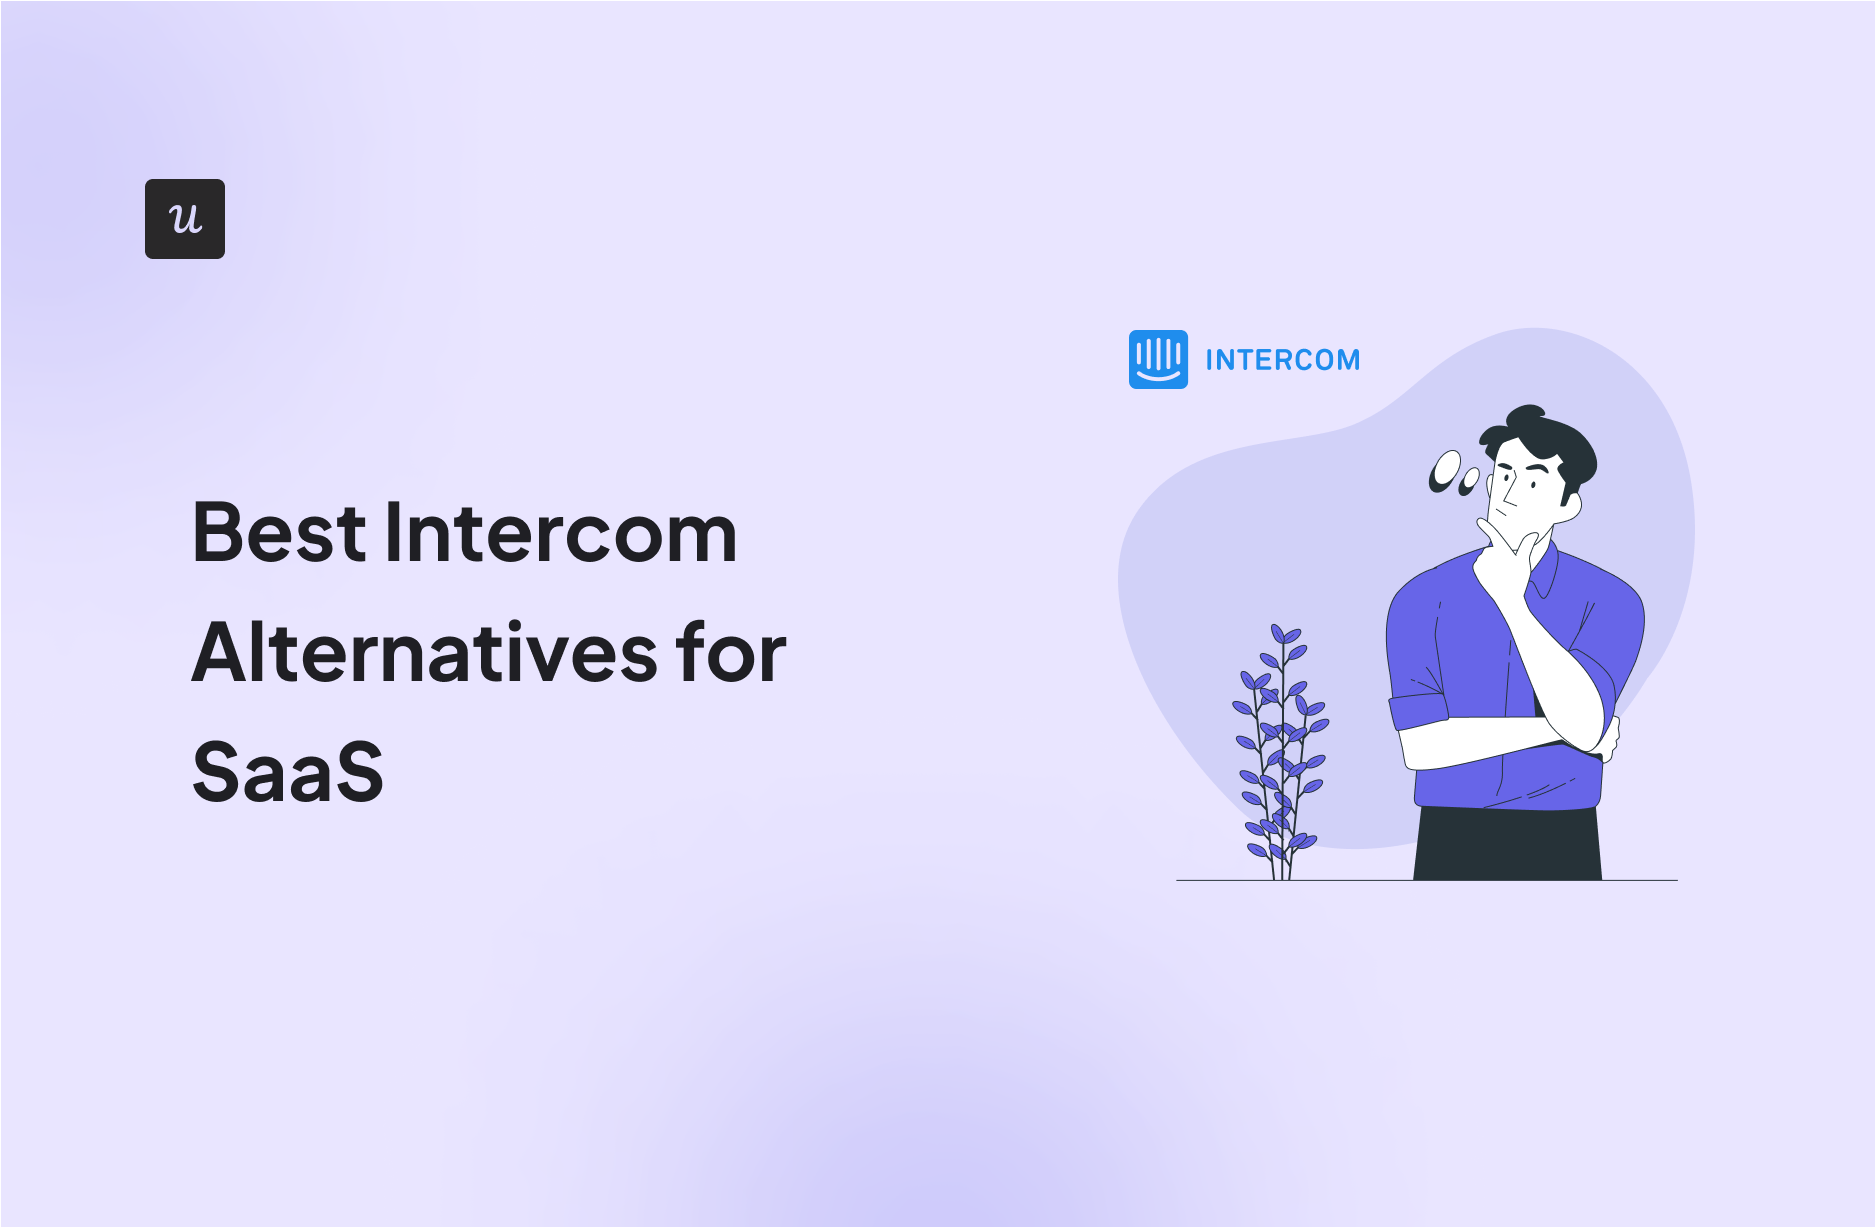 Best Intercom Alternatives for SaaS